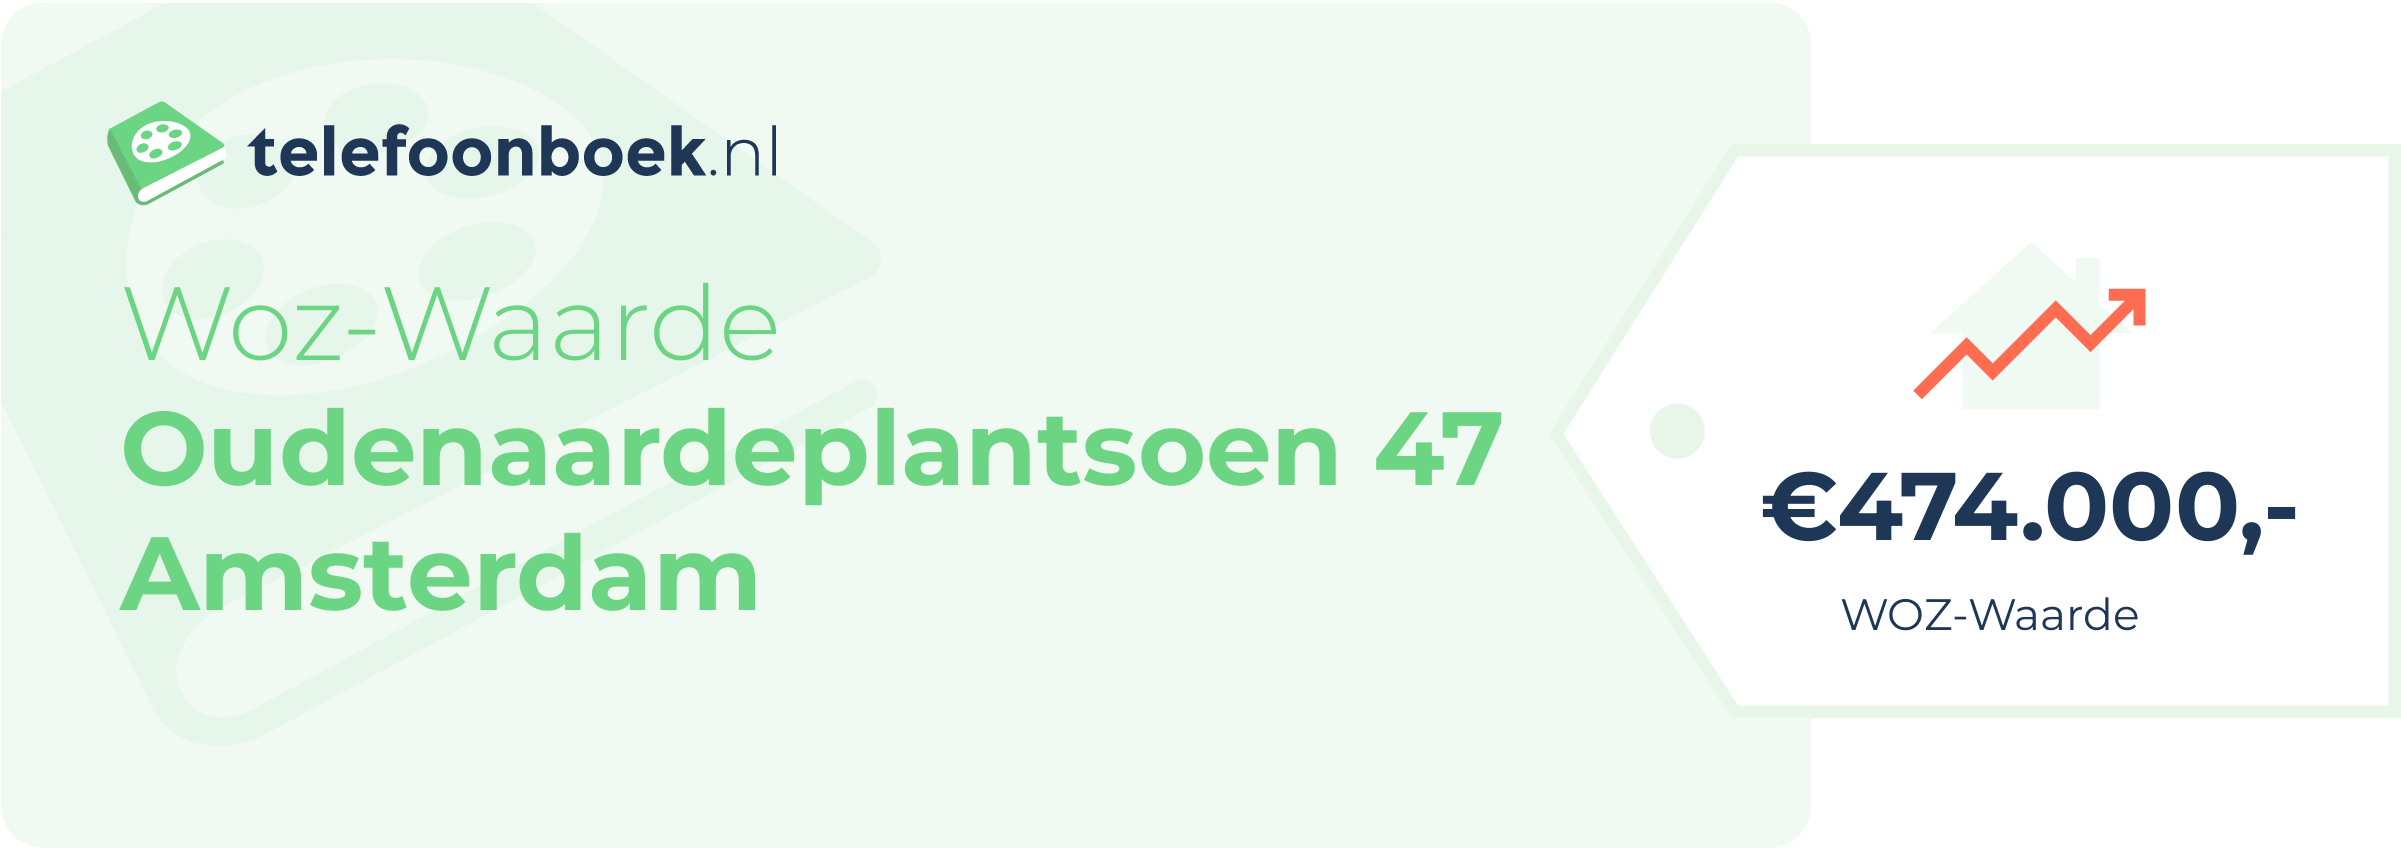 WOZ-waarde Oudenaardeplantsoen 47 Amsterdam